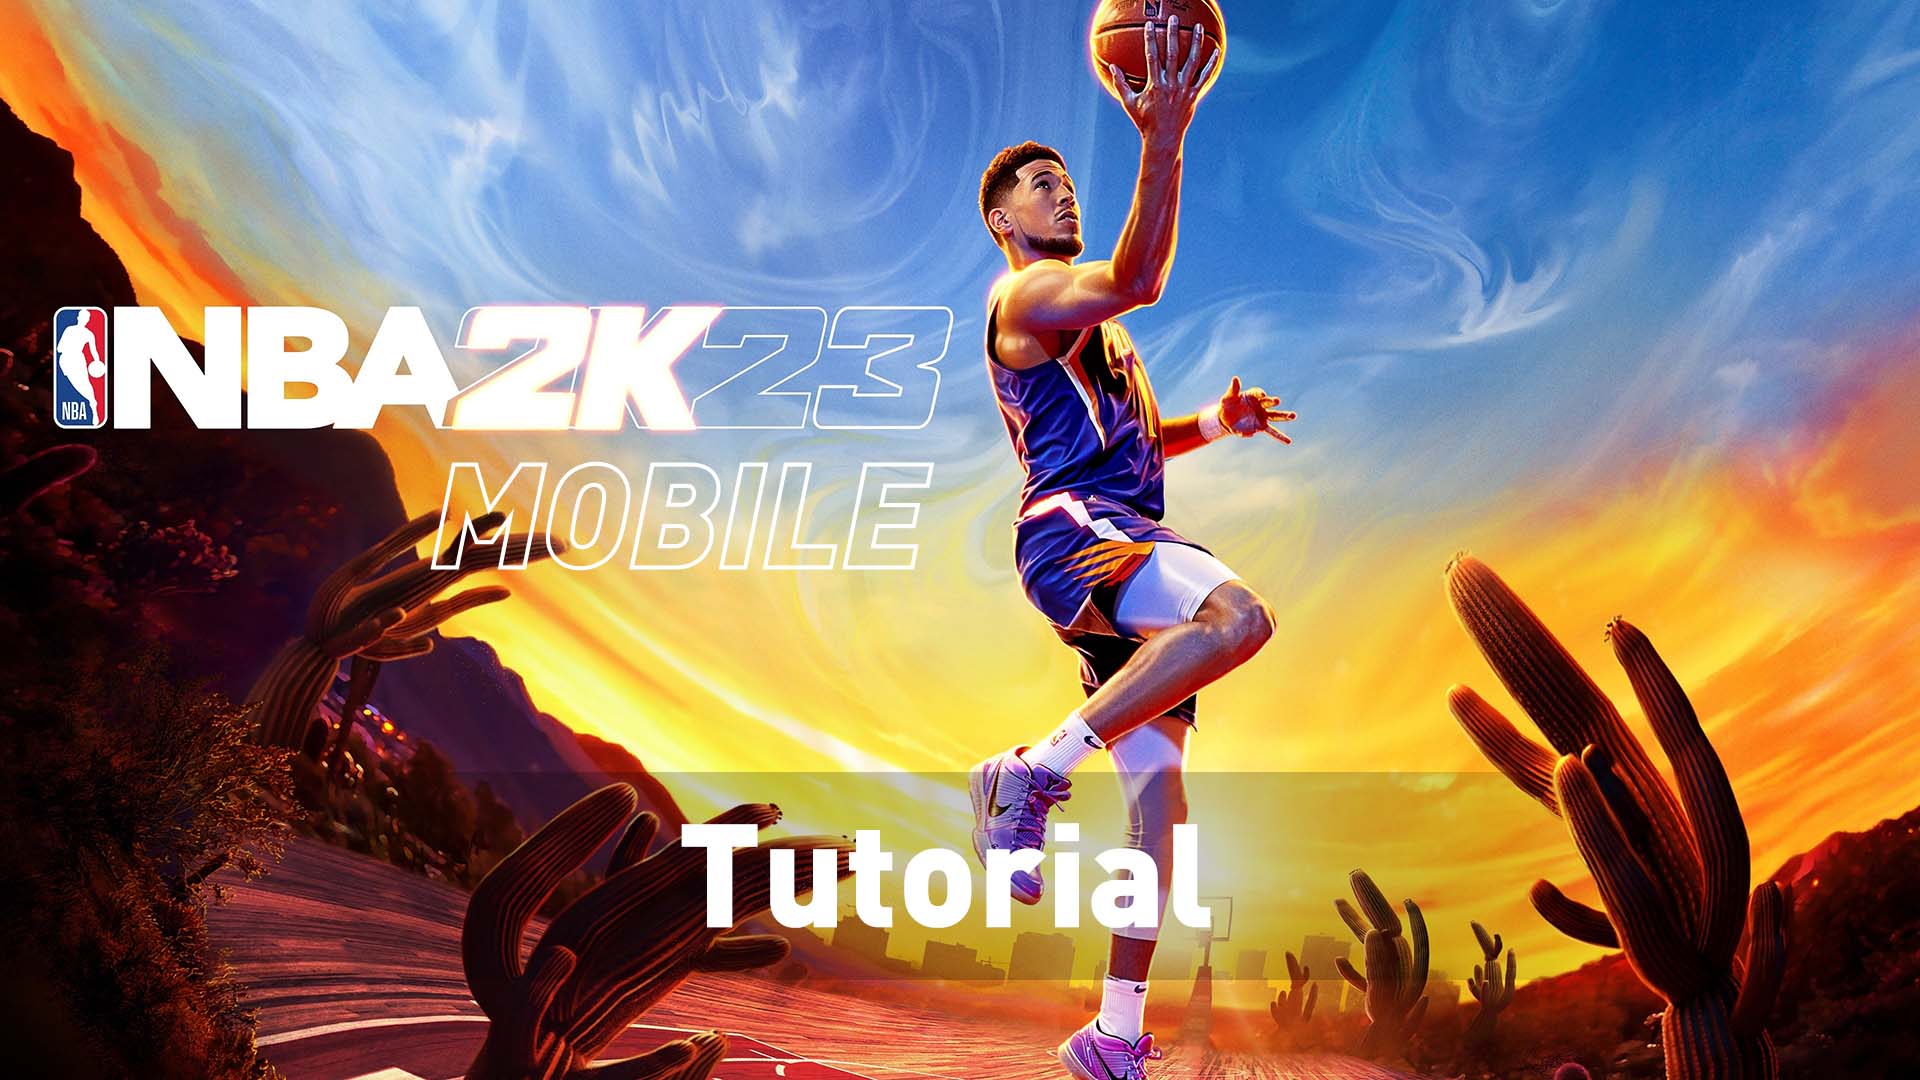 NBA 2k23 mobile guide cover